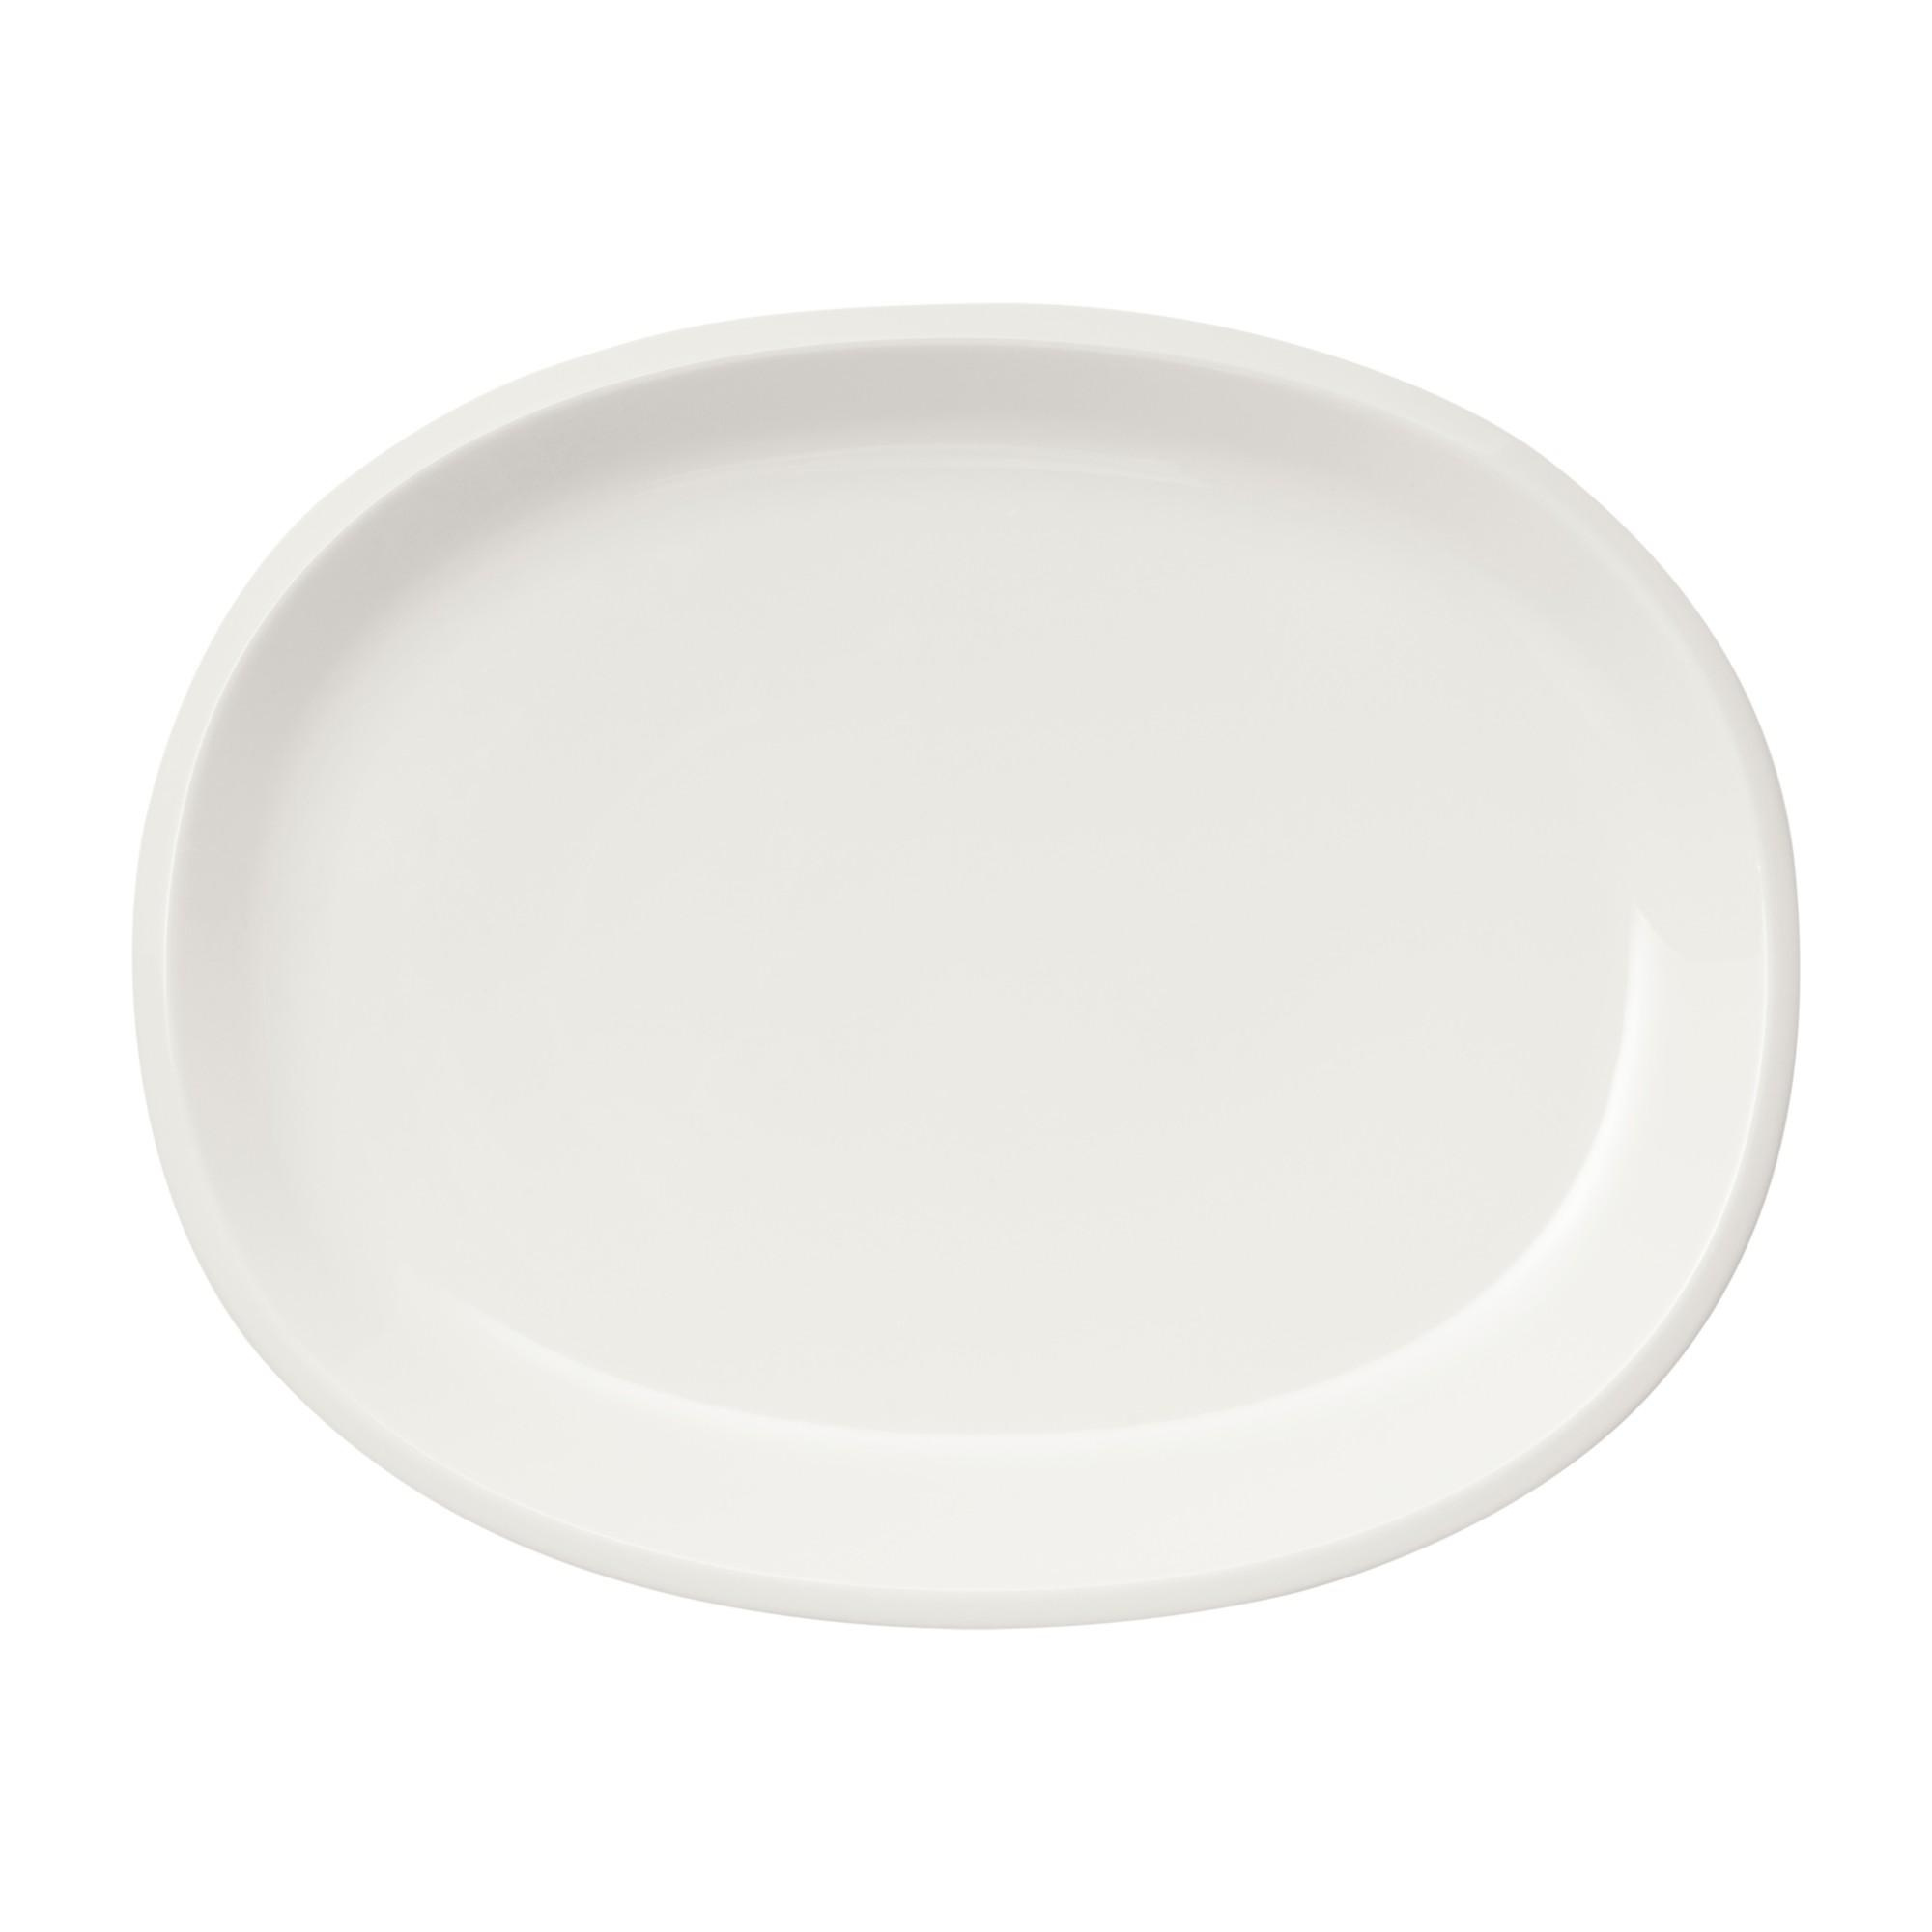 iittala - plat de service raami ovale 35cm - blanc/lxlxh 35x28x2,6cm